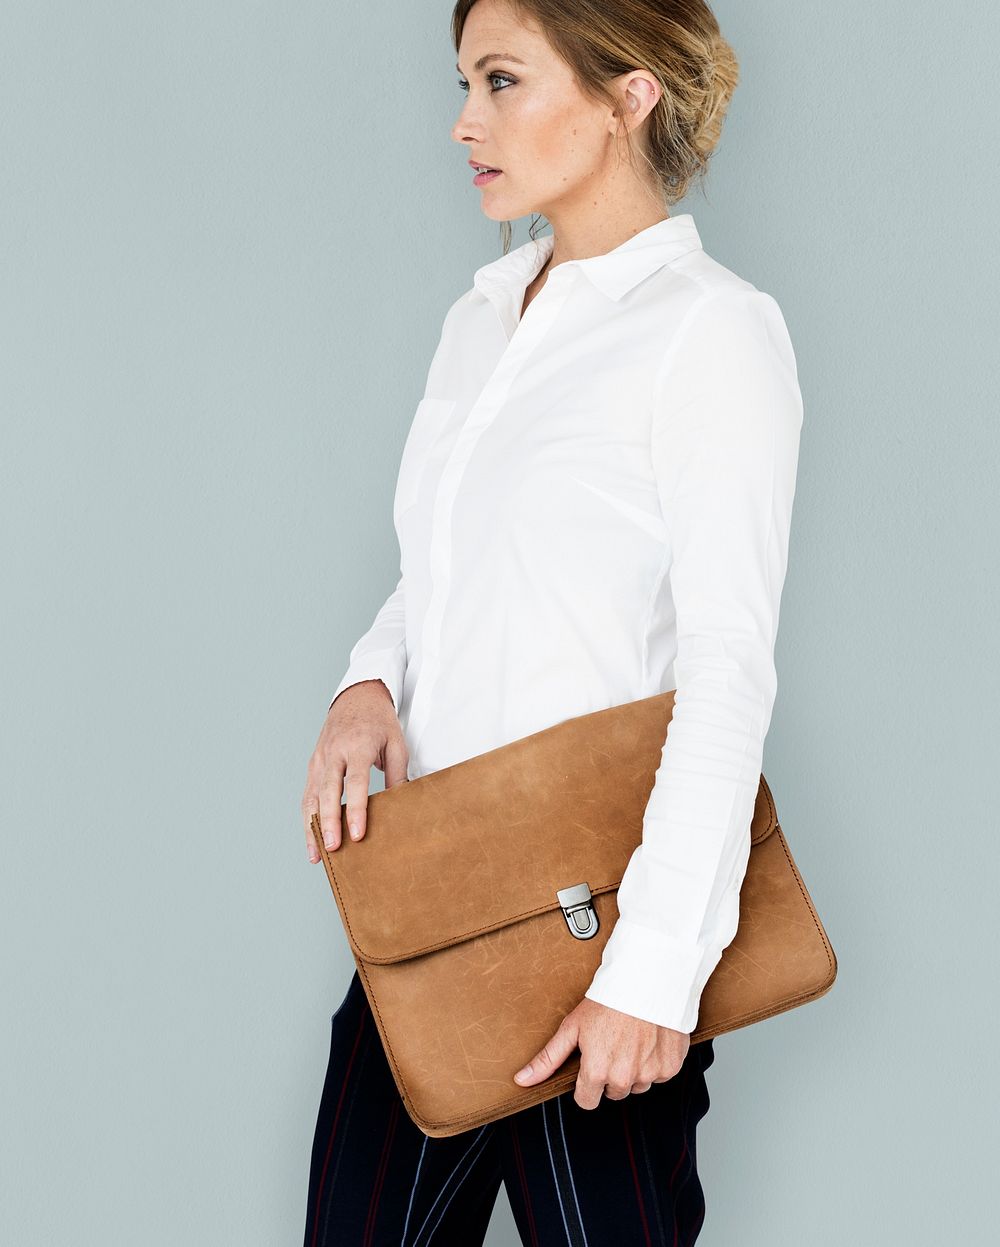 Caucasian Business Woman Holding Bag